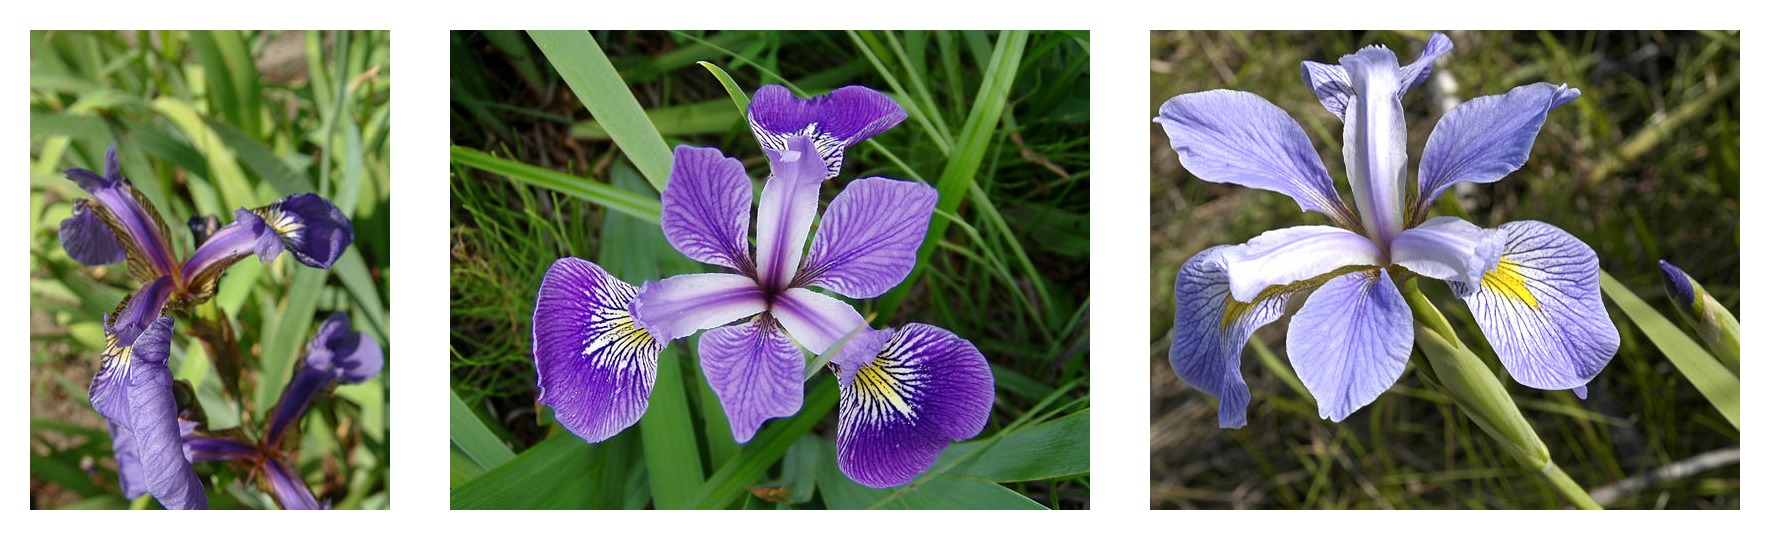 Geometria del petalo confrontata per tre specie di iris: Iris setosa, Iris virginica e Iris versicolor